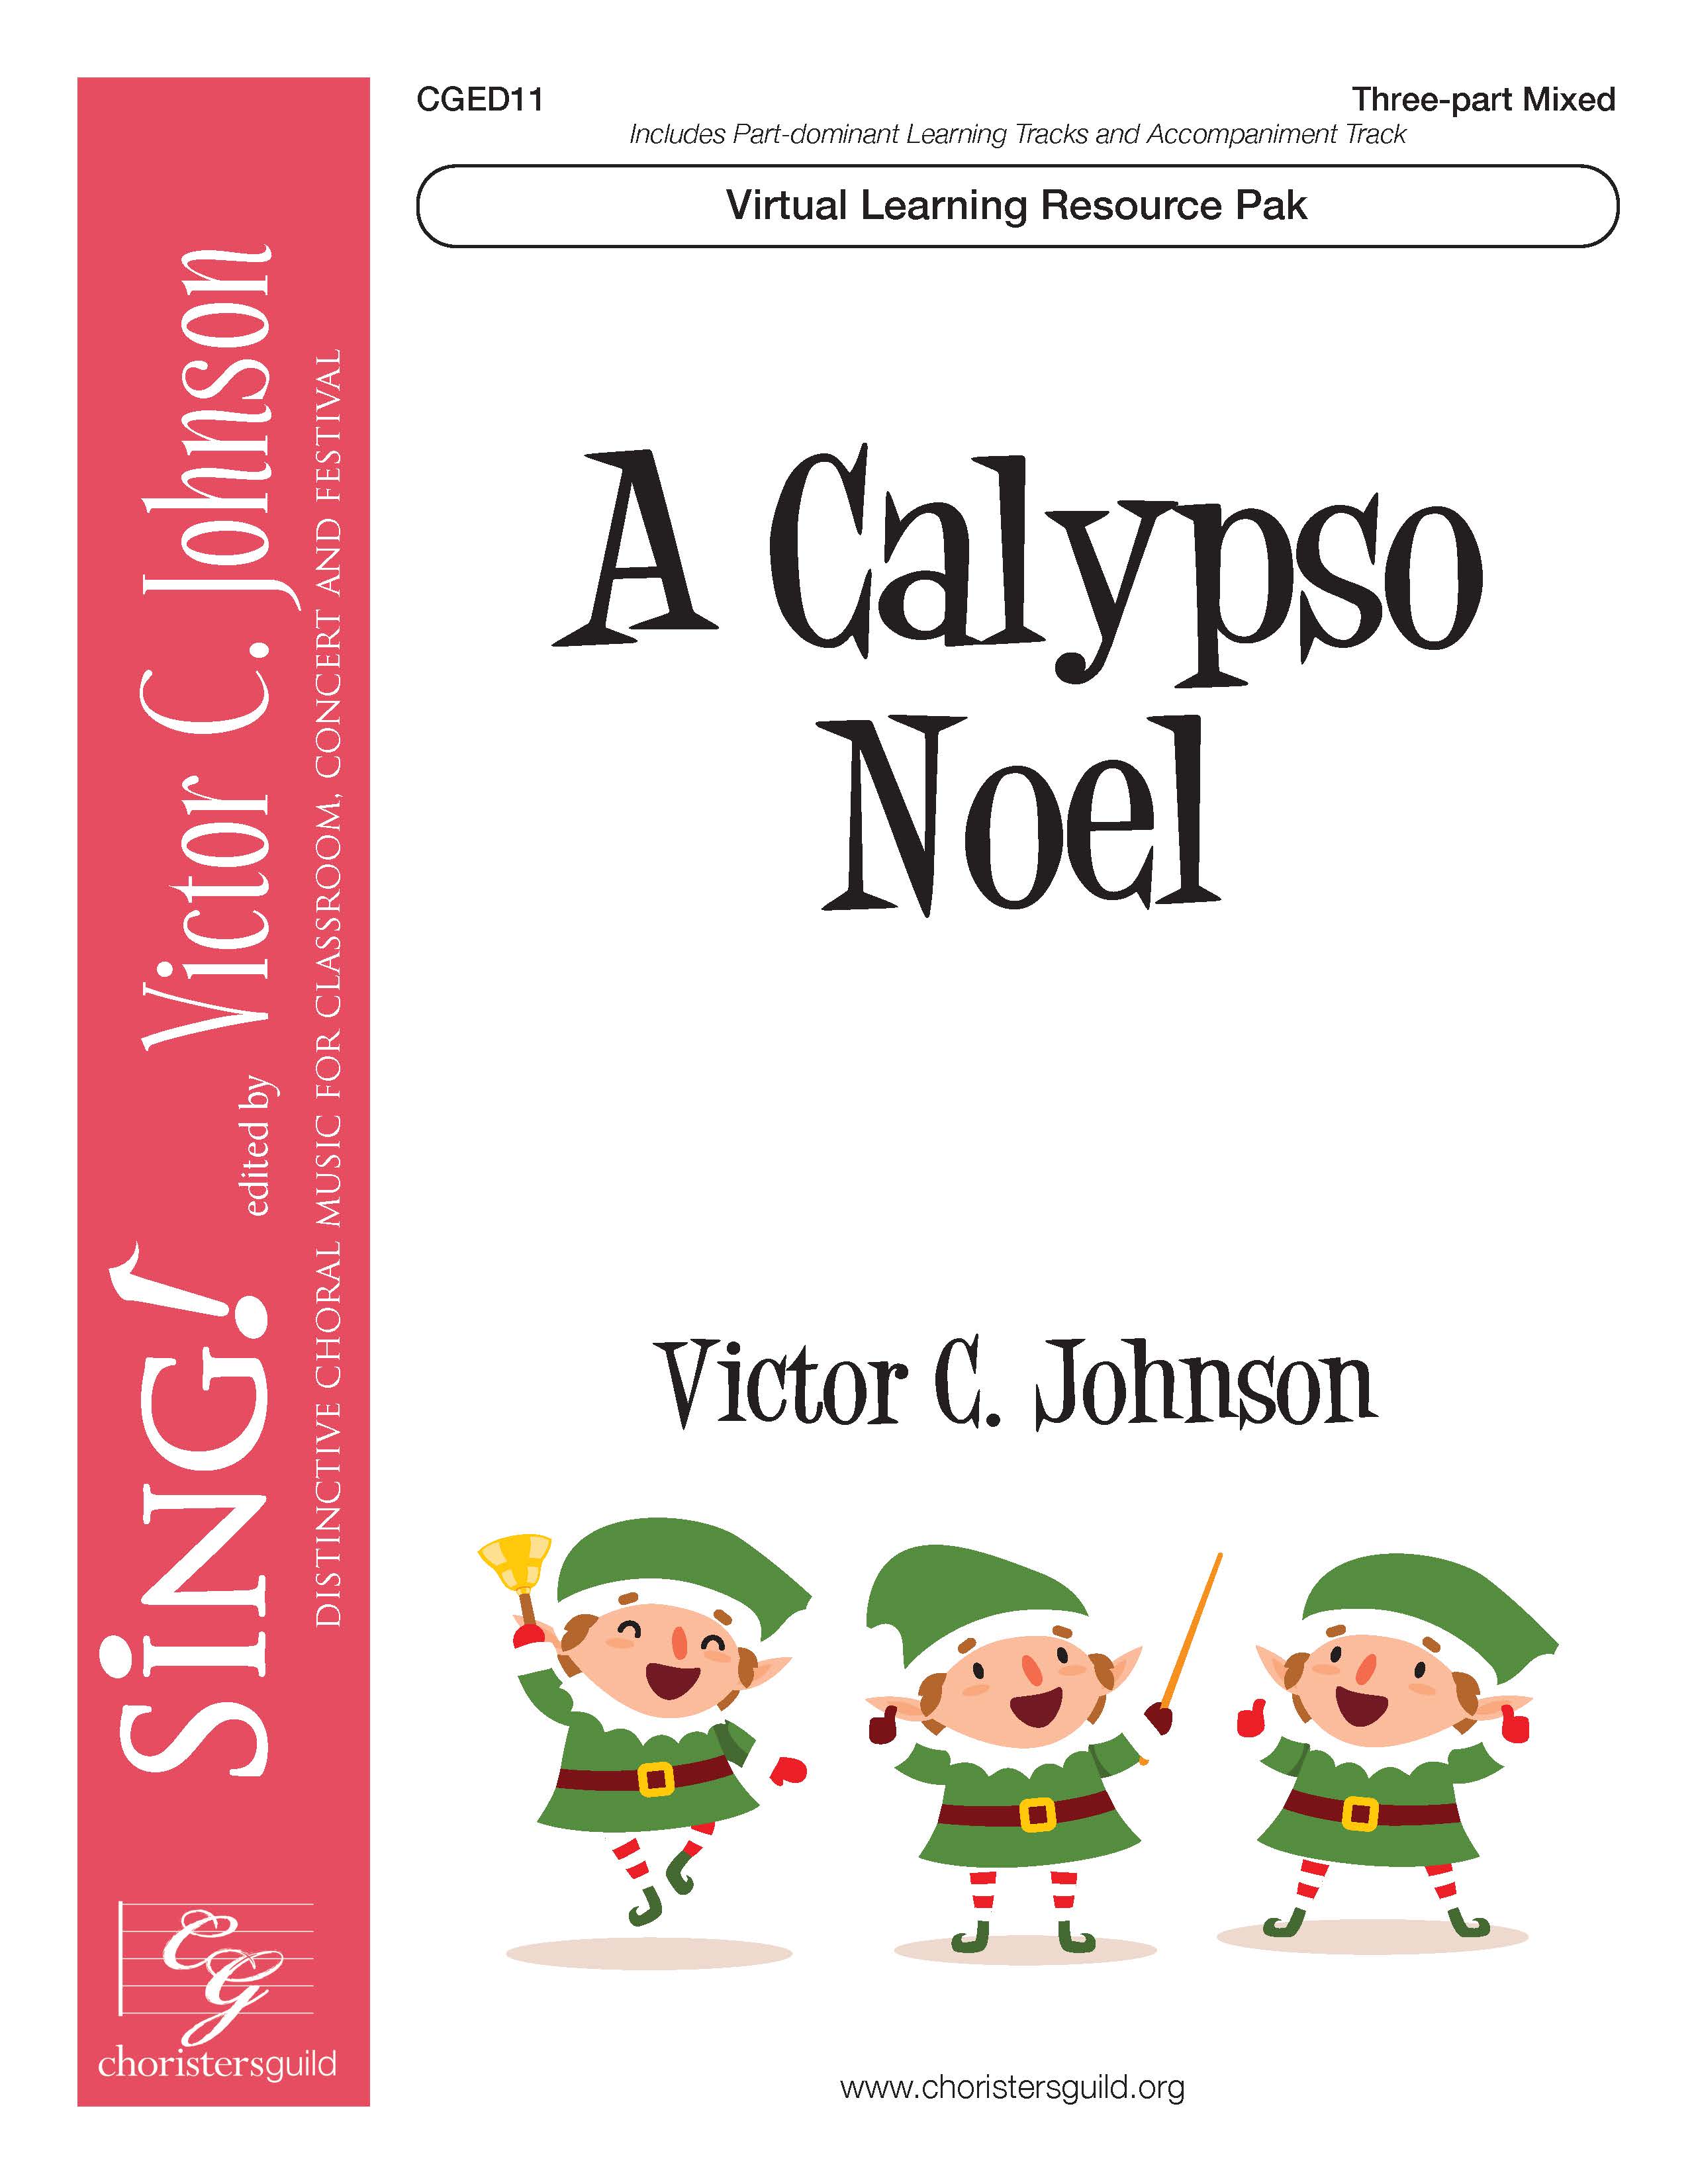 A Calypso Noel (Virtual Learning Resource Pak) - Three-part mixed